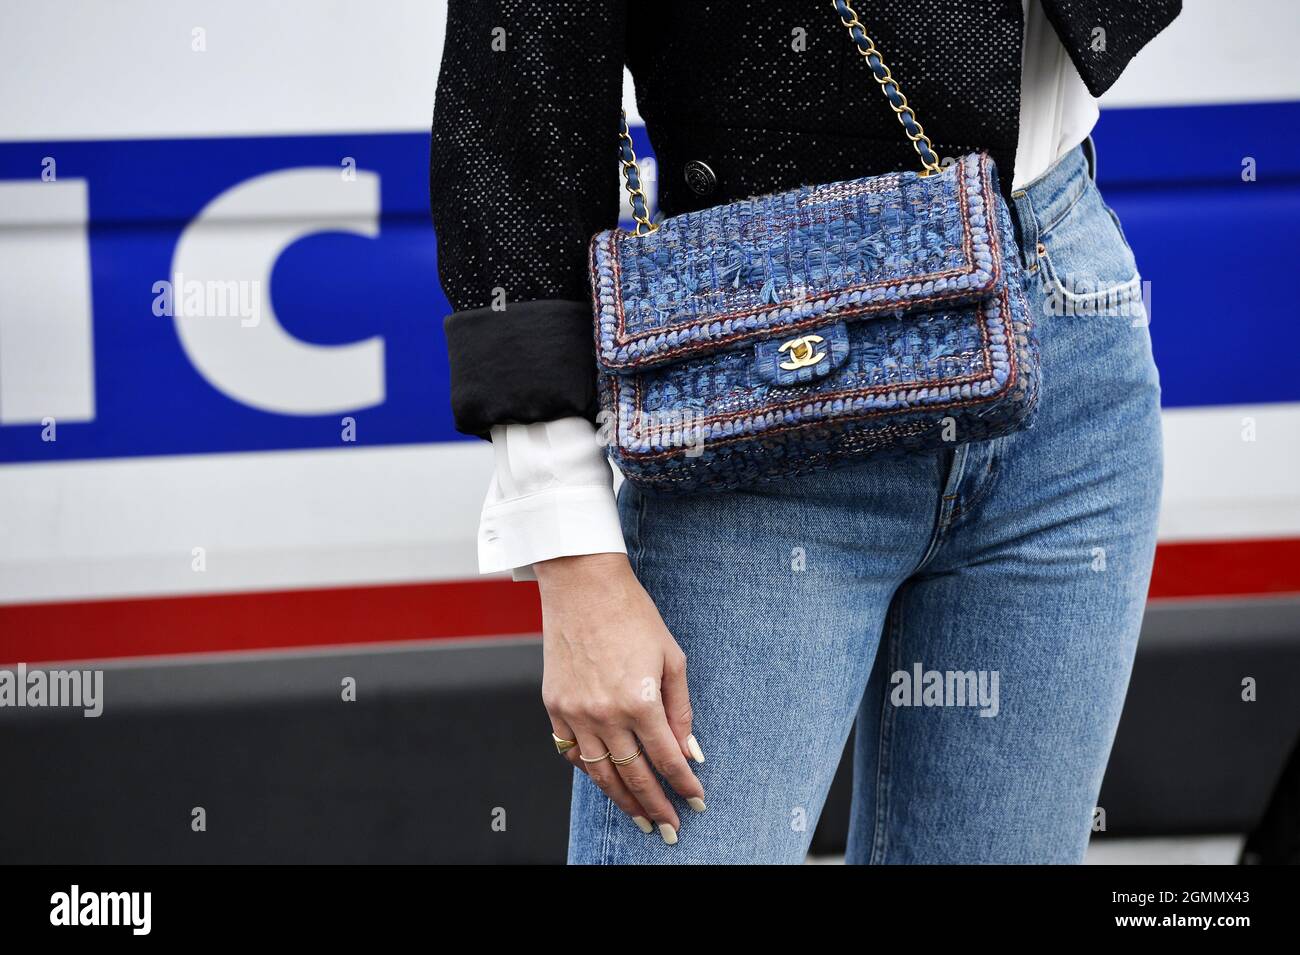 Sac et jeans Chanel - Streetstyle à Paris Fashion week - France Photo Stock  - Alamy